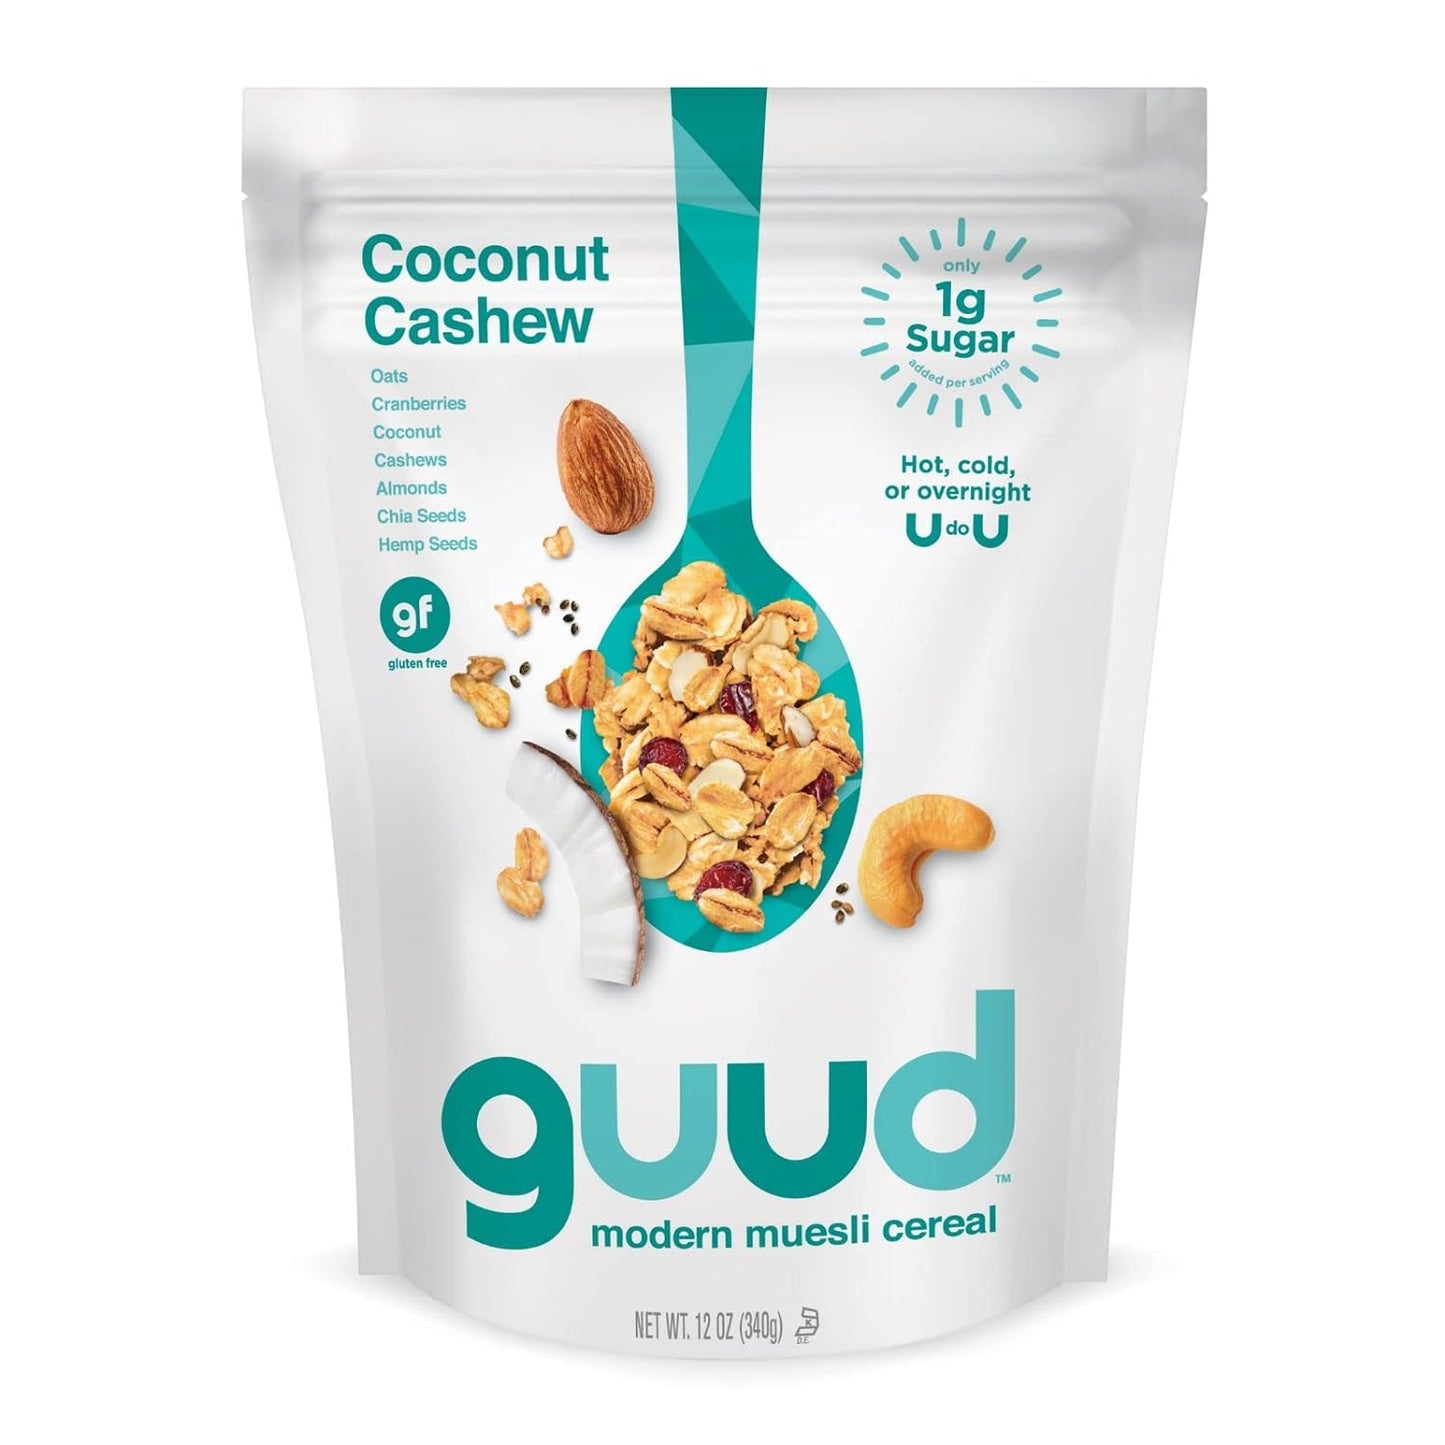 GUUD Modern Muesli - Coconut Cashew Gluten Free Muesli, 12.00 oz, 1 bag